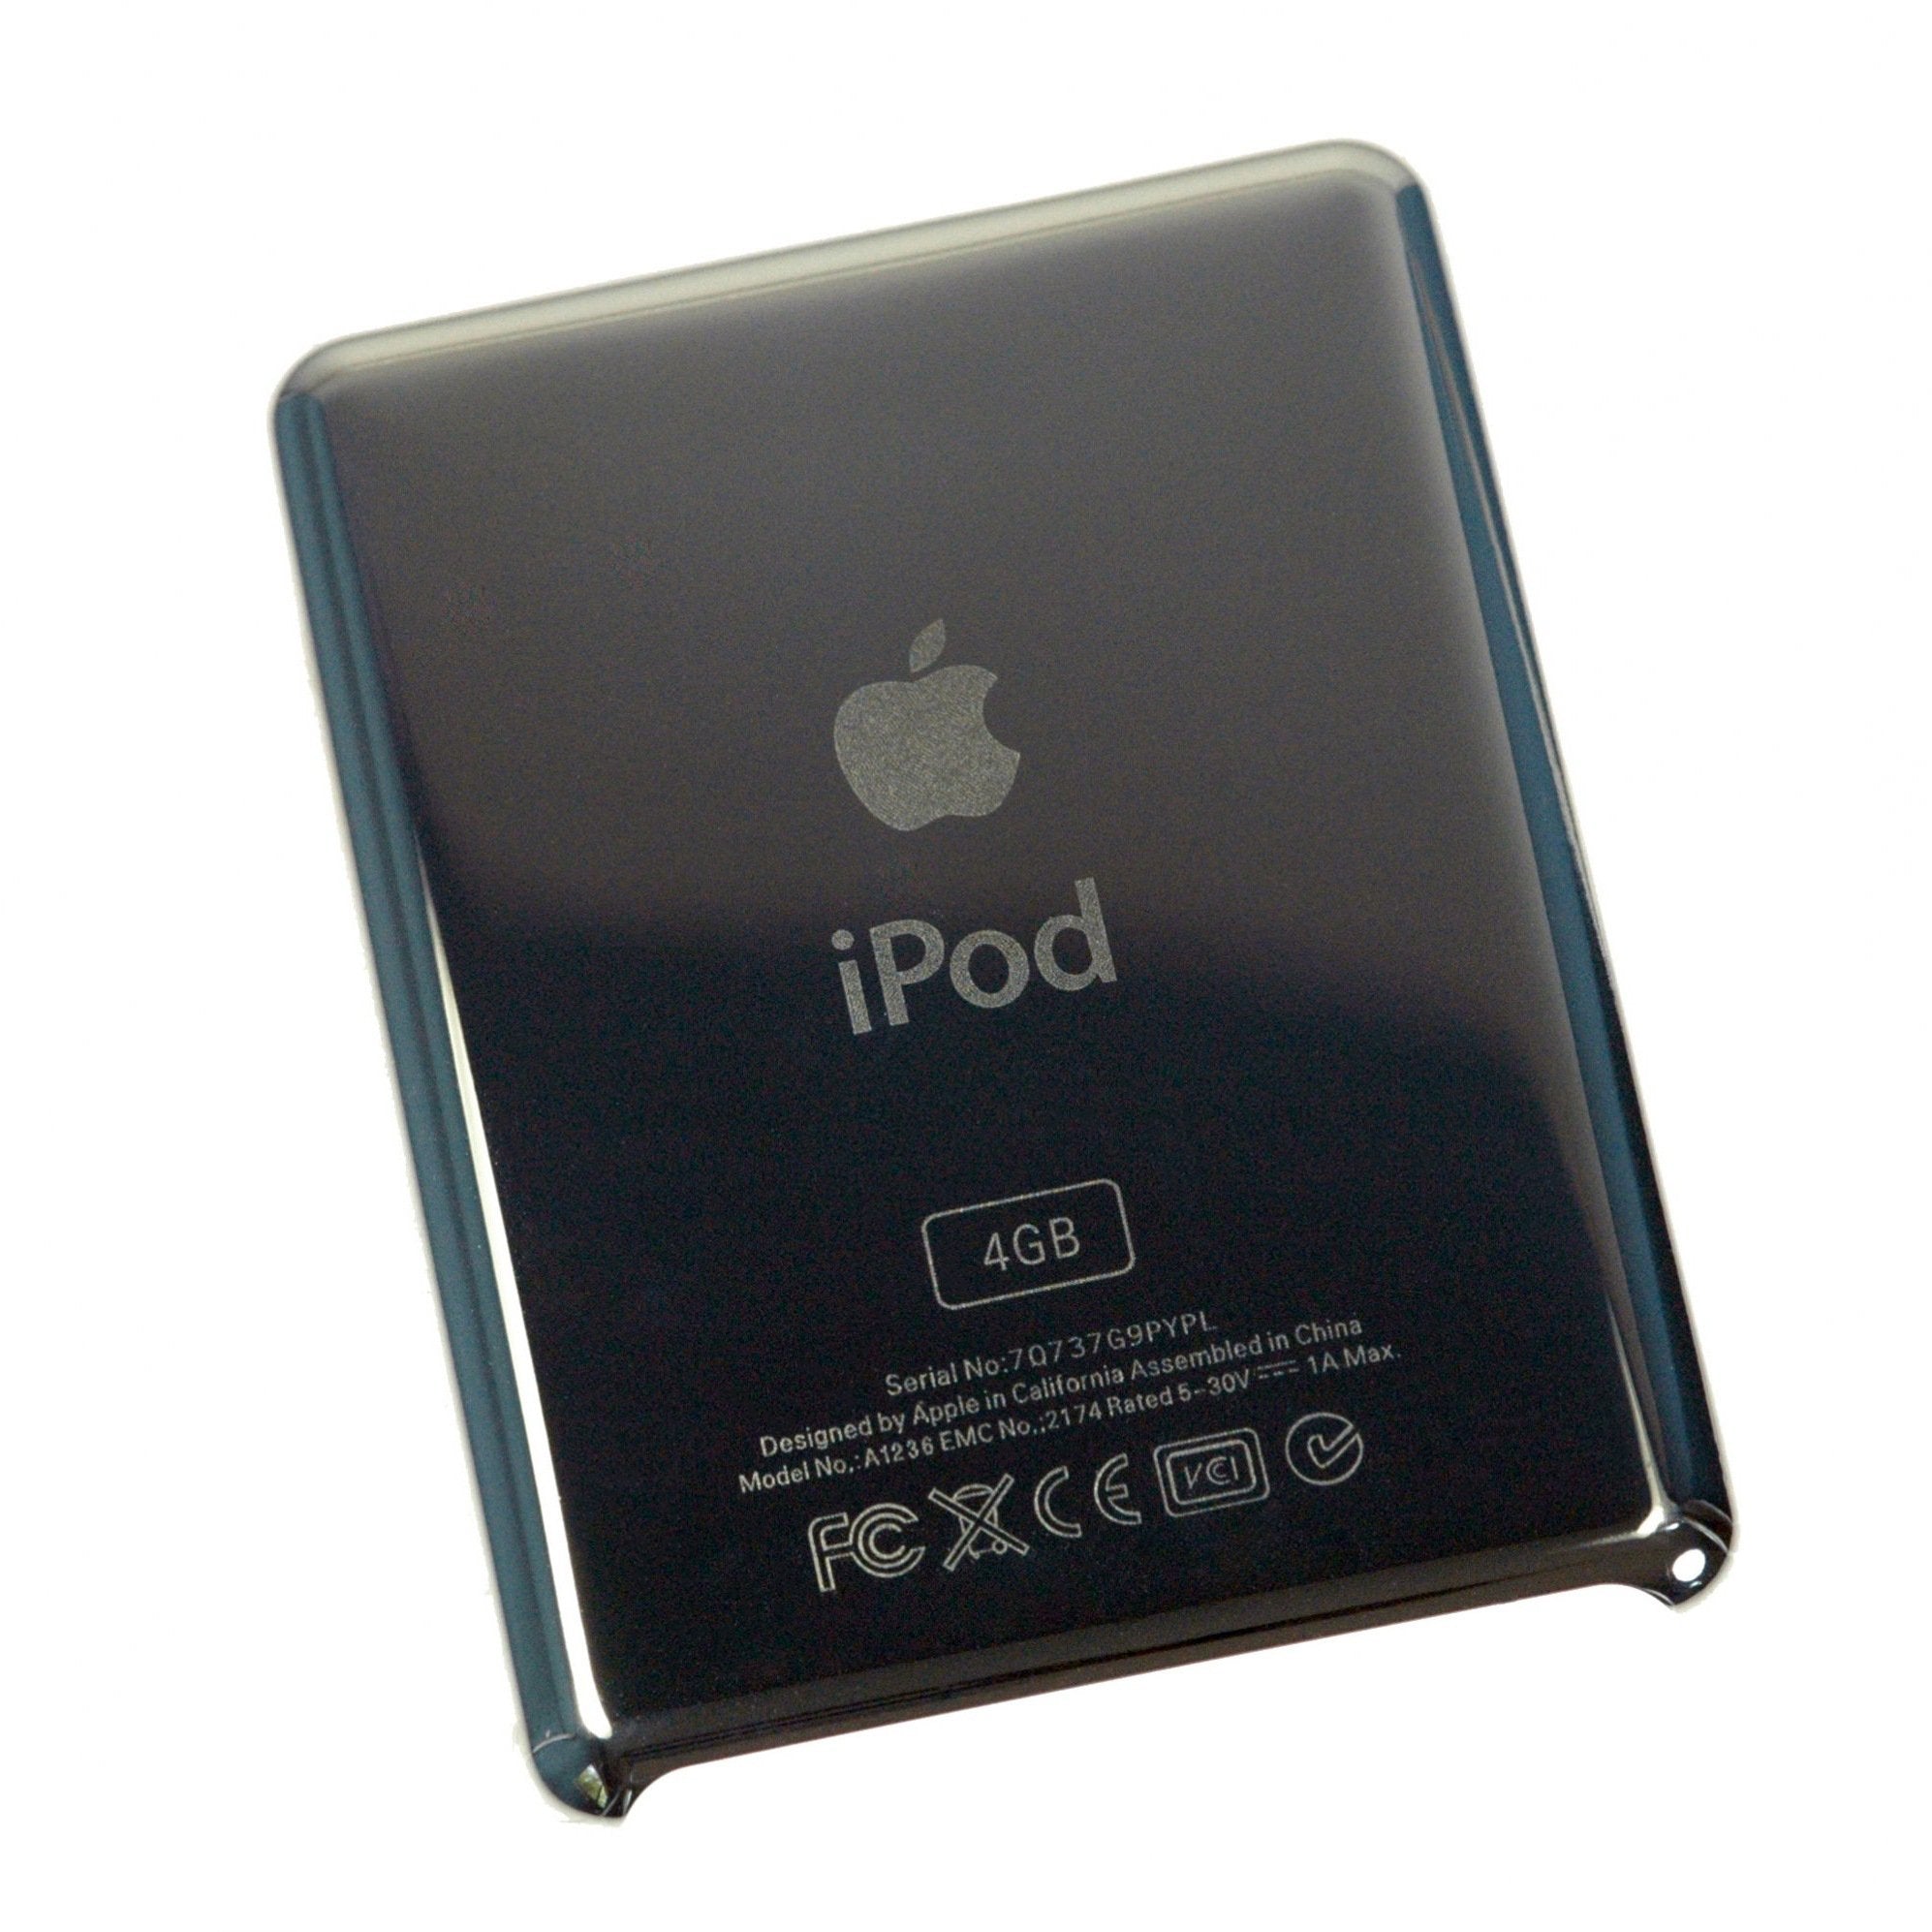 iPod Nano 3rd Generation Troubleshooting - iFixit